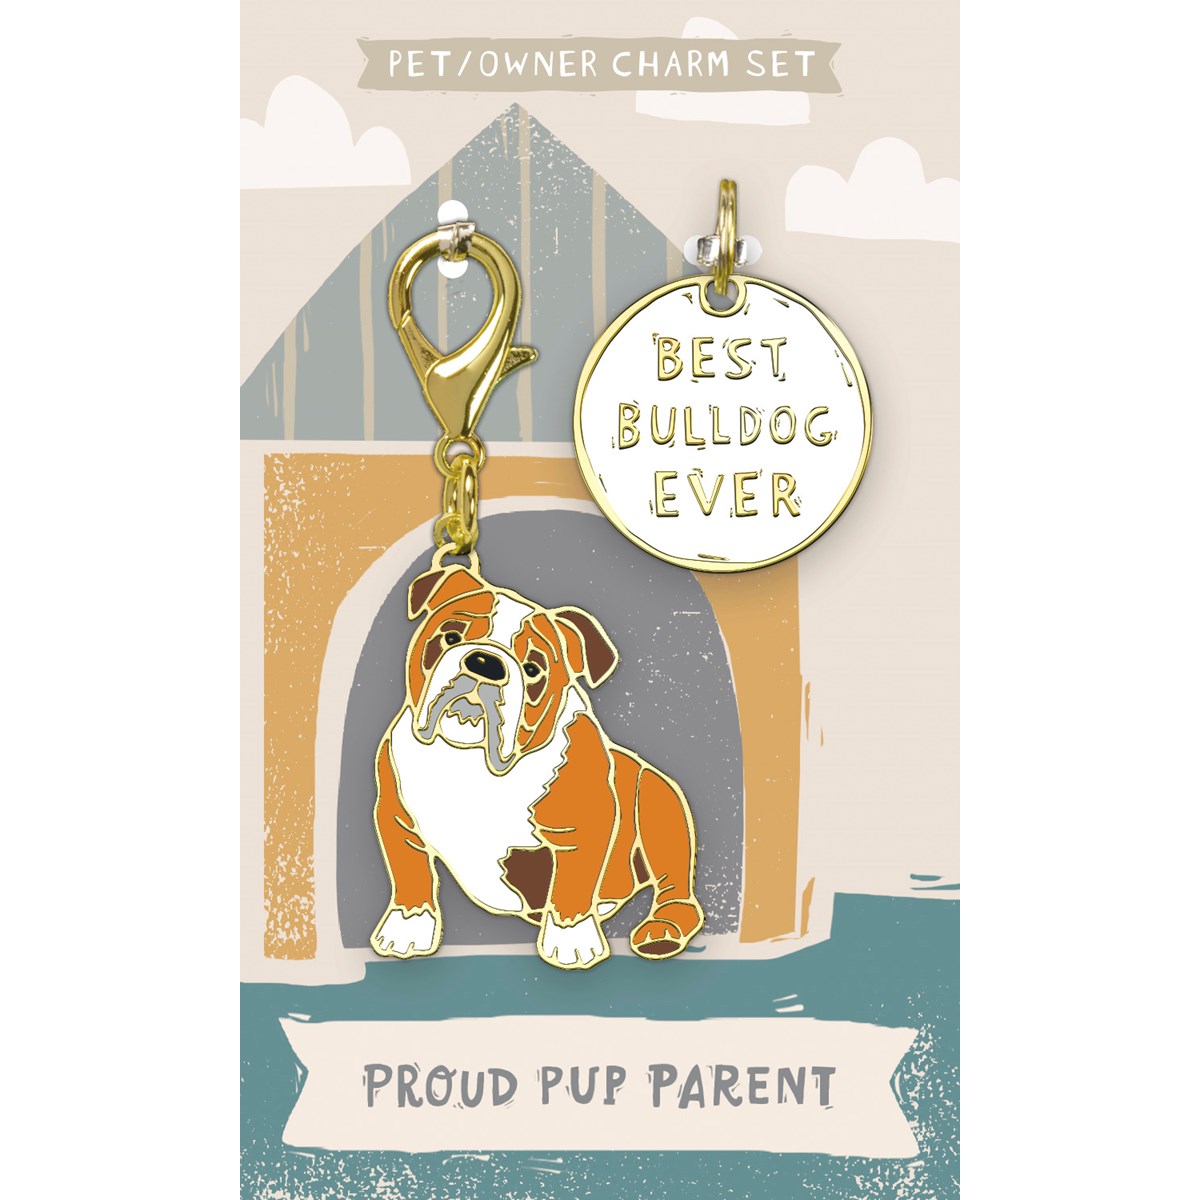 Best Bulldog Ever Charm Set - Metal, Enamel, Paper